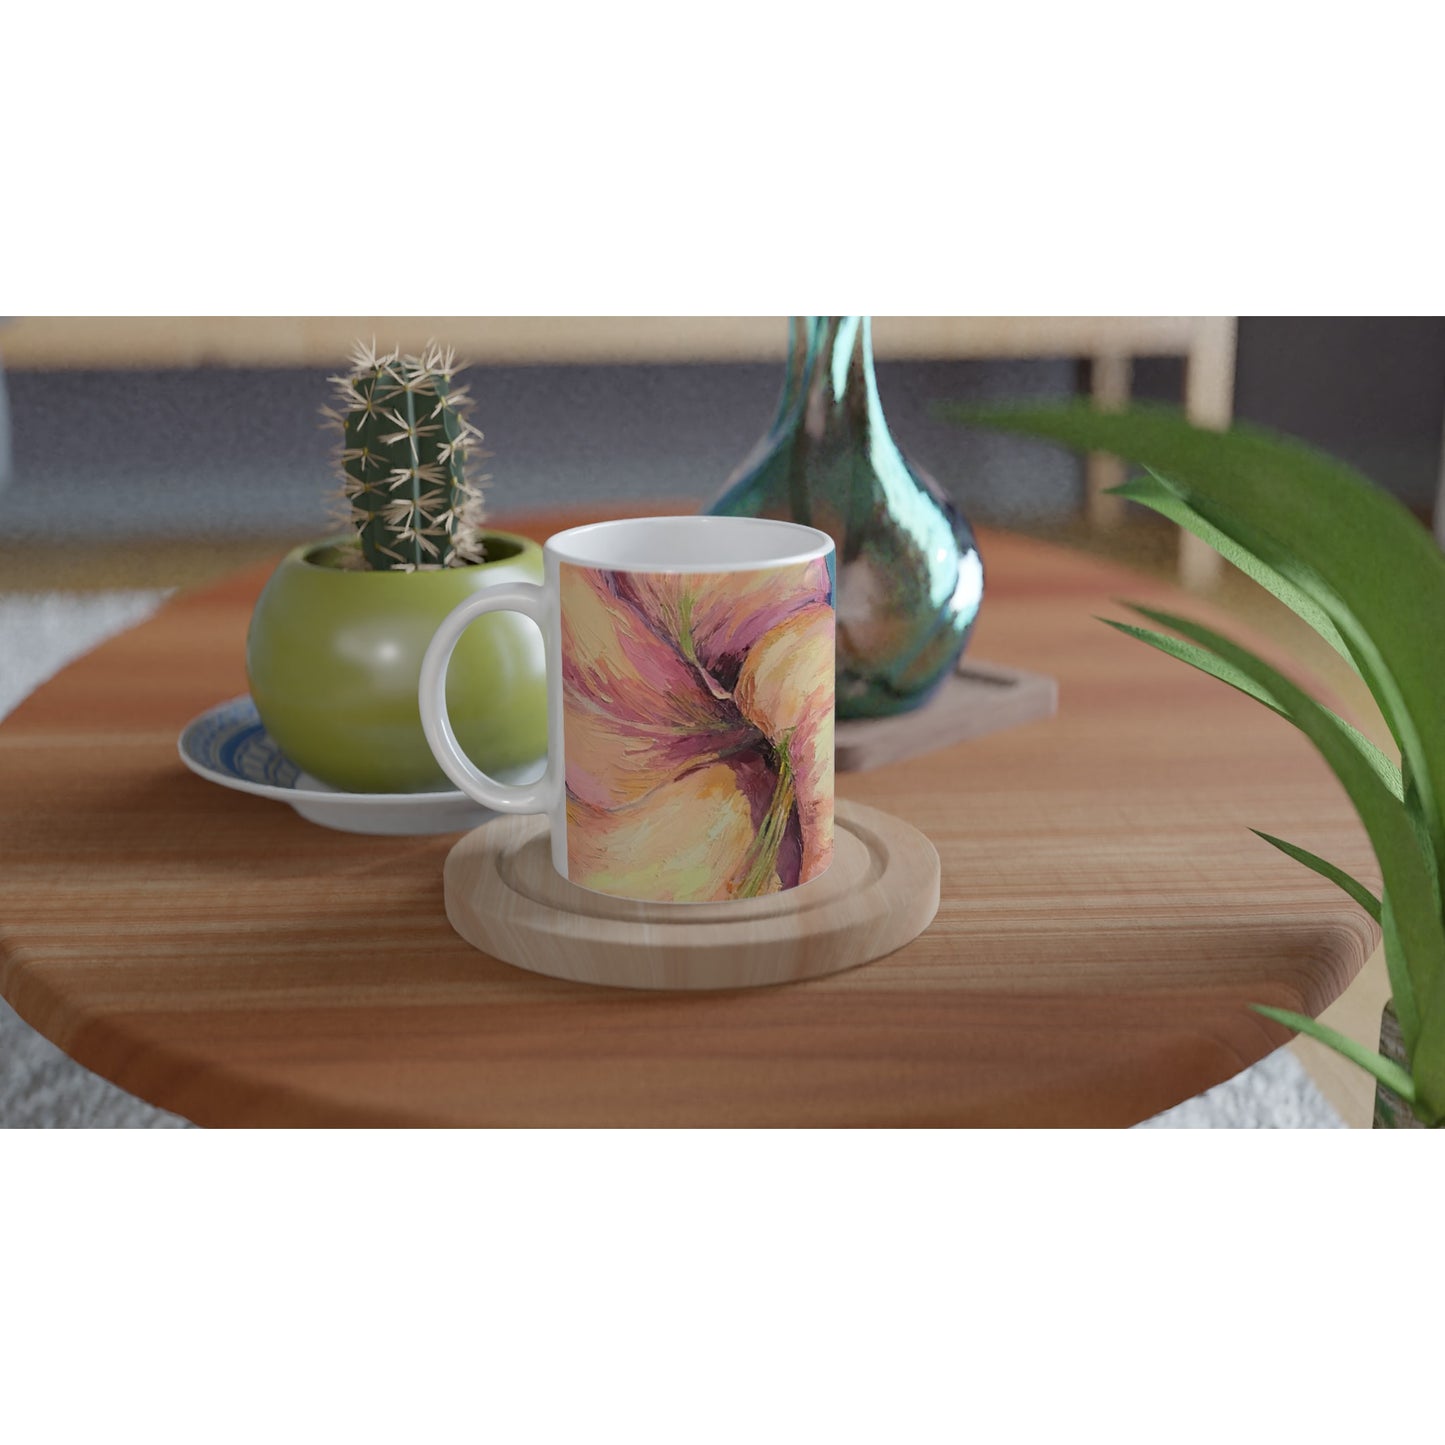 "Amaryllis 2" Floral White 11oz Ceramic Mug by Barbara Cleary Designs